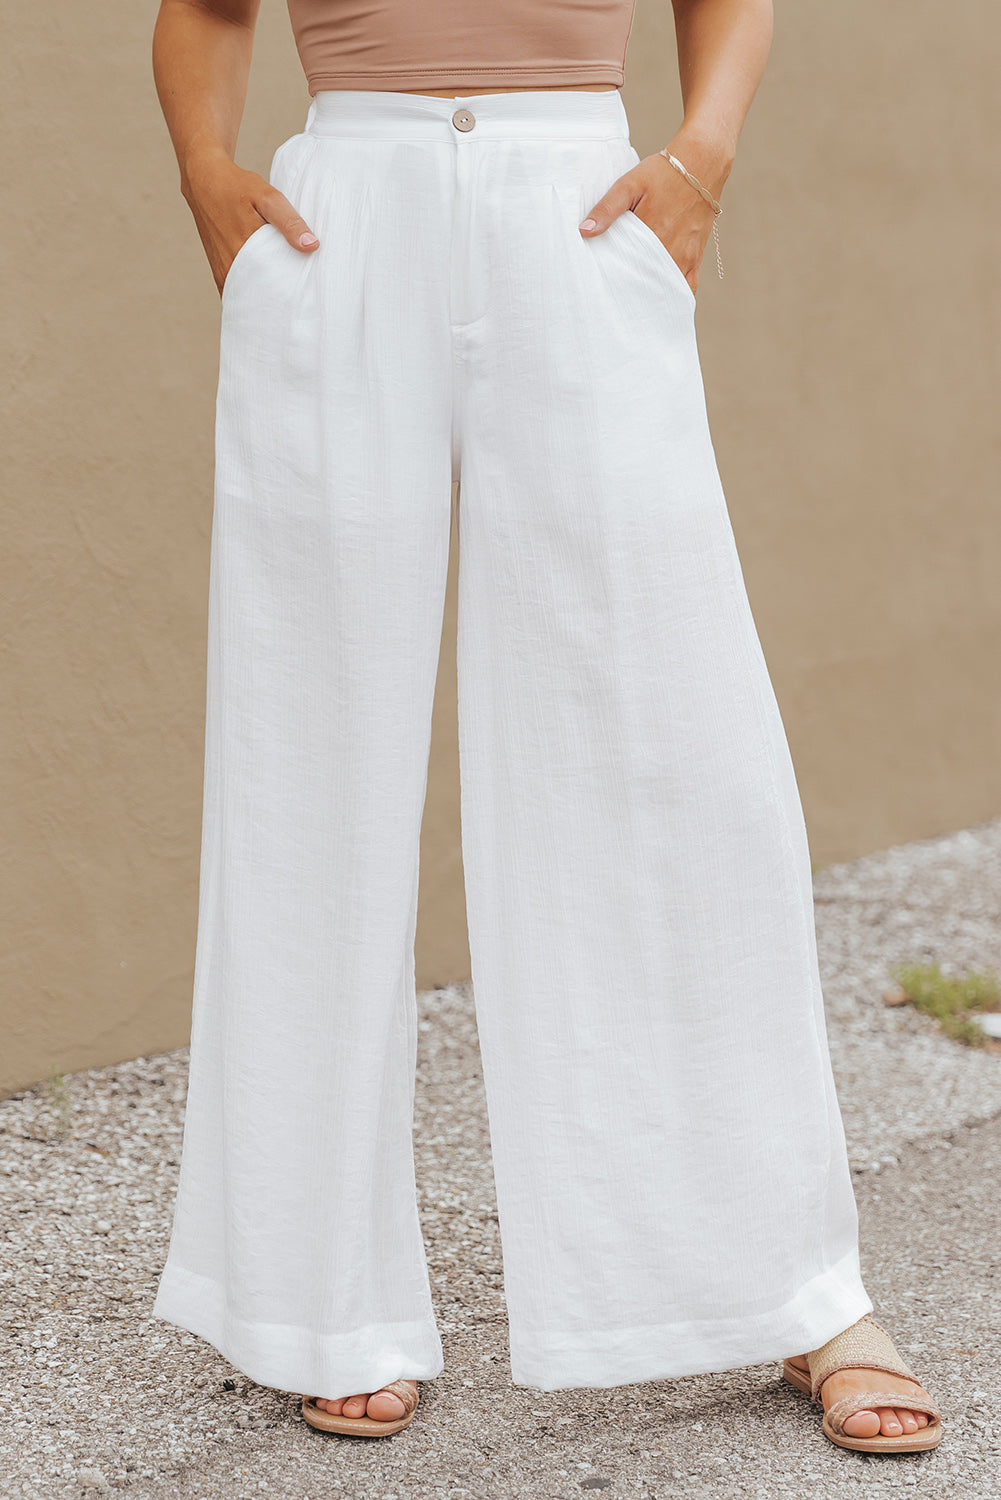 Pantaloni larghi a pieghe in vita elastica tinta unita bianchi